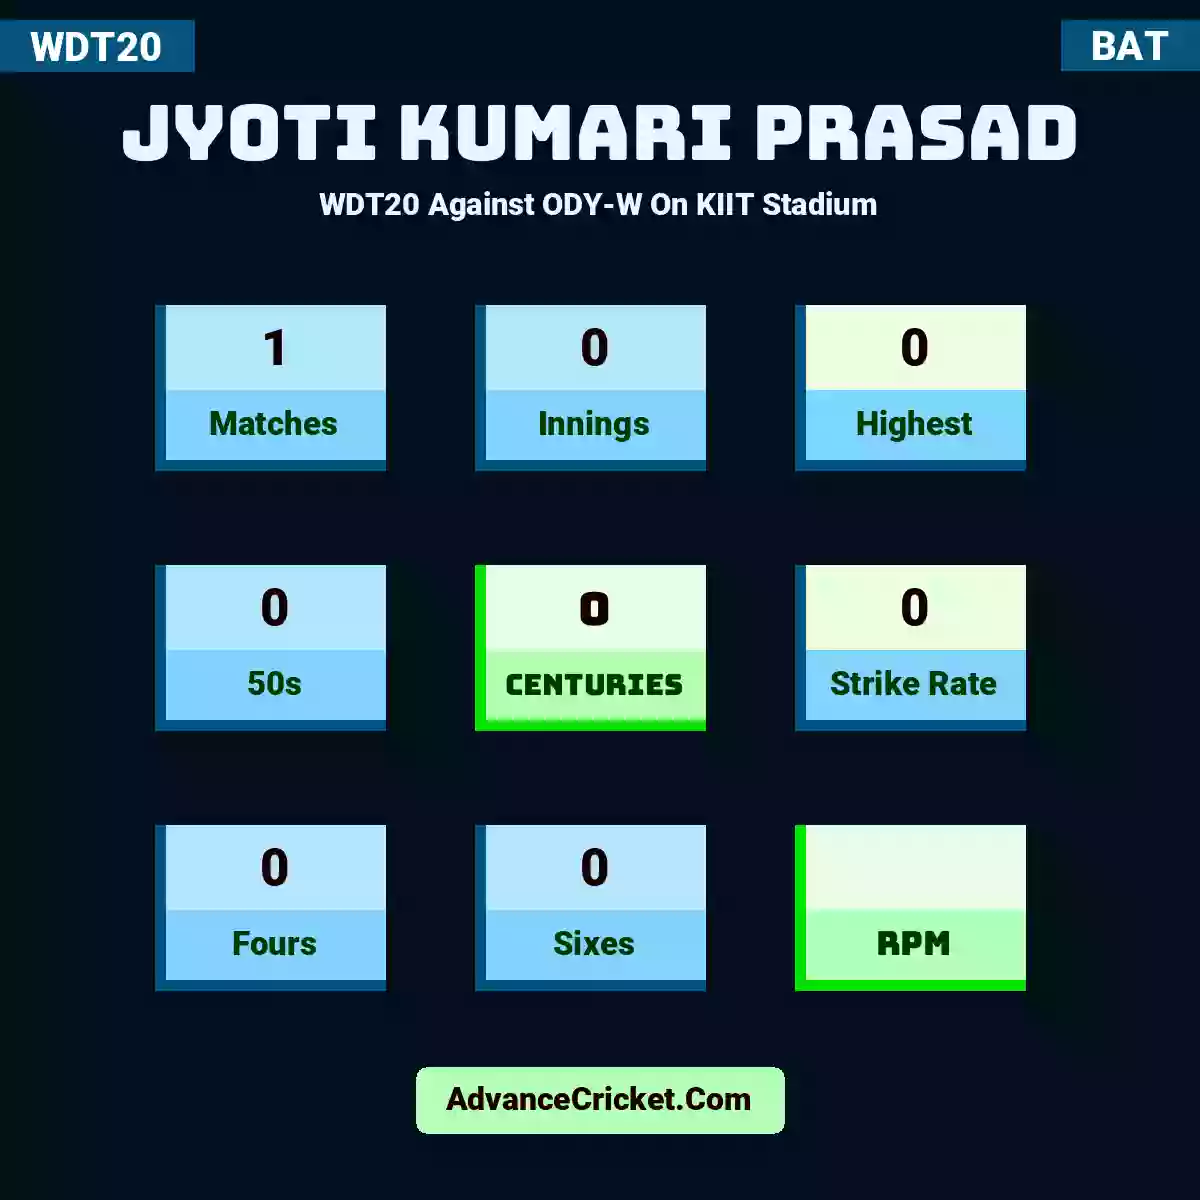 Jyoti Kumari Prasad WDT20  Against ODY-W On KIIT Stadium, Jyoti Kumari Prasad played 1 matches, scored 0 runs as highest, 0 half-centuries, and 0 centuries, with a strike rate of 0. J.Kumari Prasad hit 0 fours and 0 sixes.